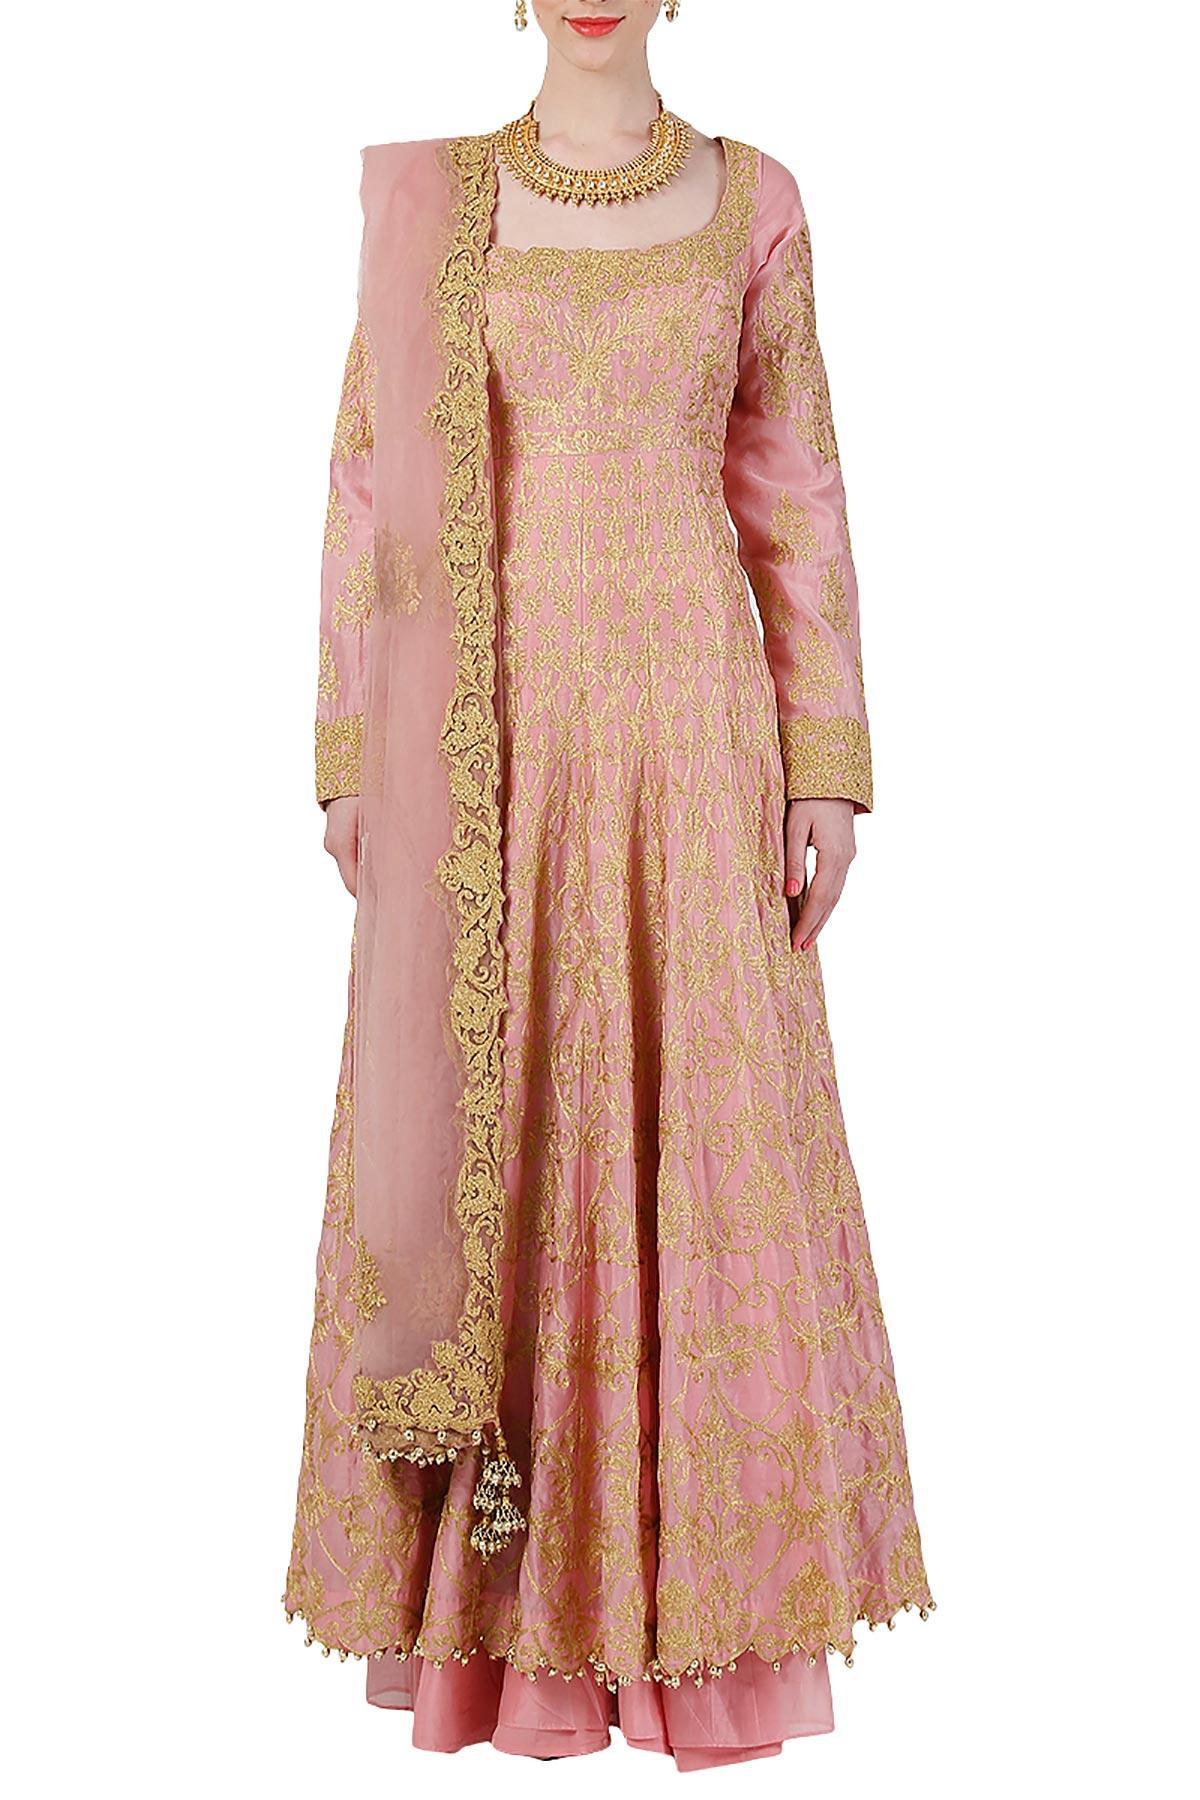 Rimple and harpreet lehenga Buy Online Saree Salwar Suit Kurti Palazzo  Sharara 22